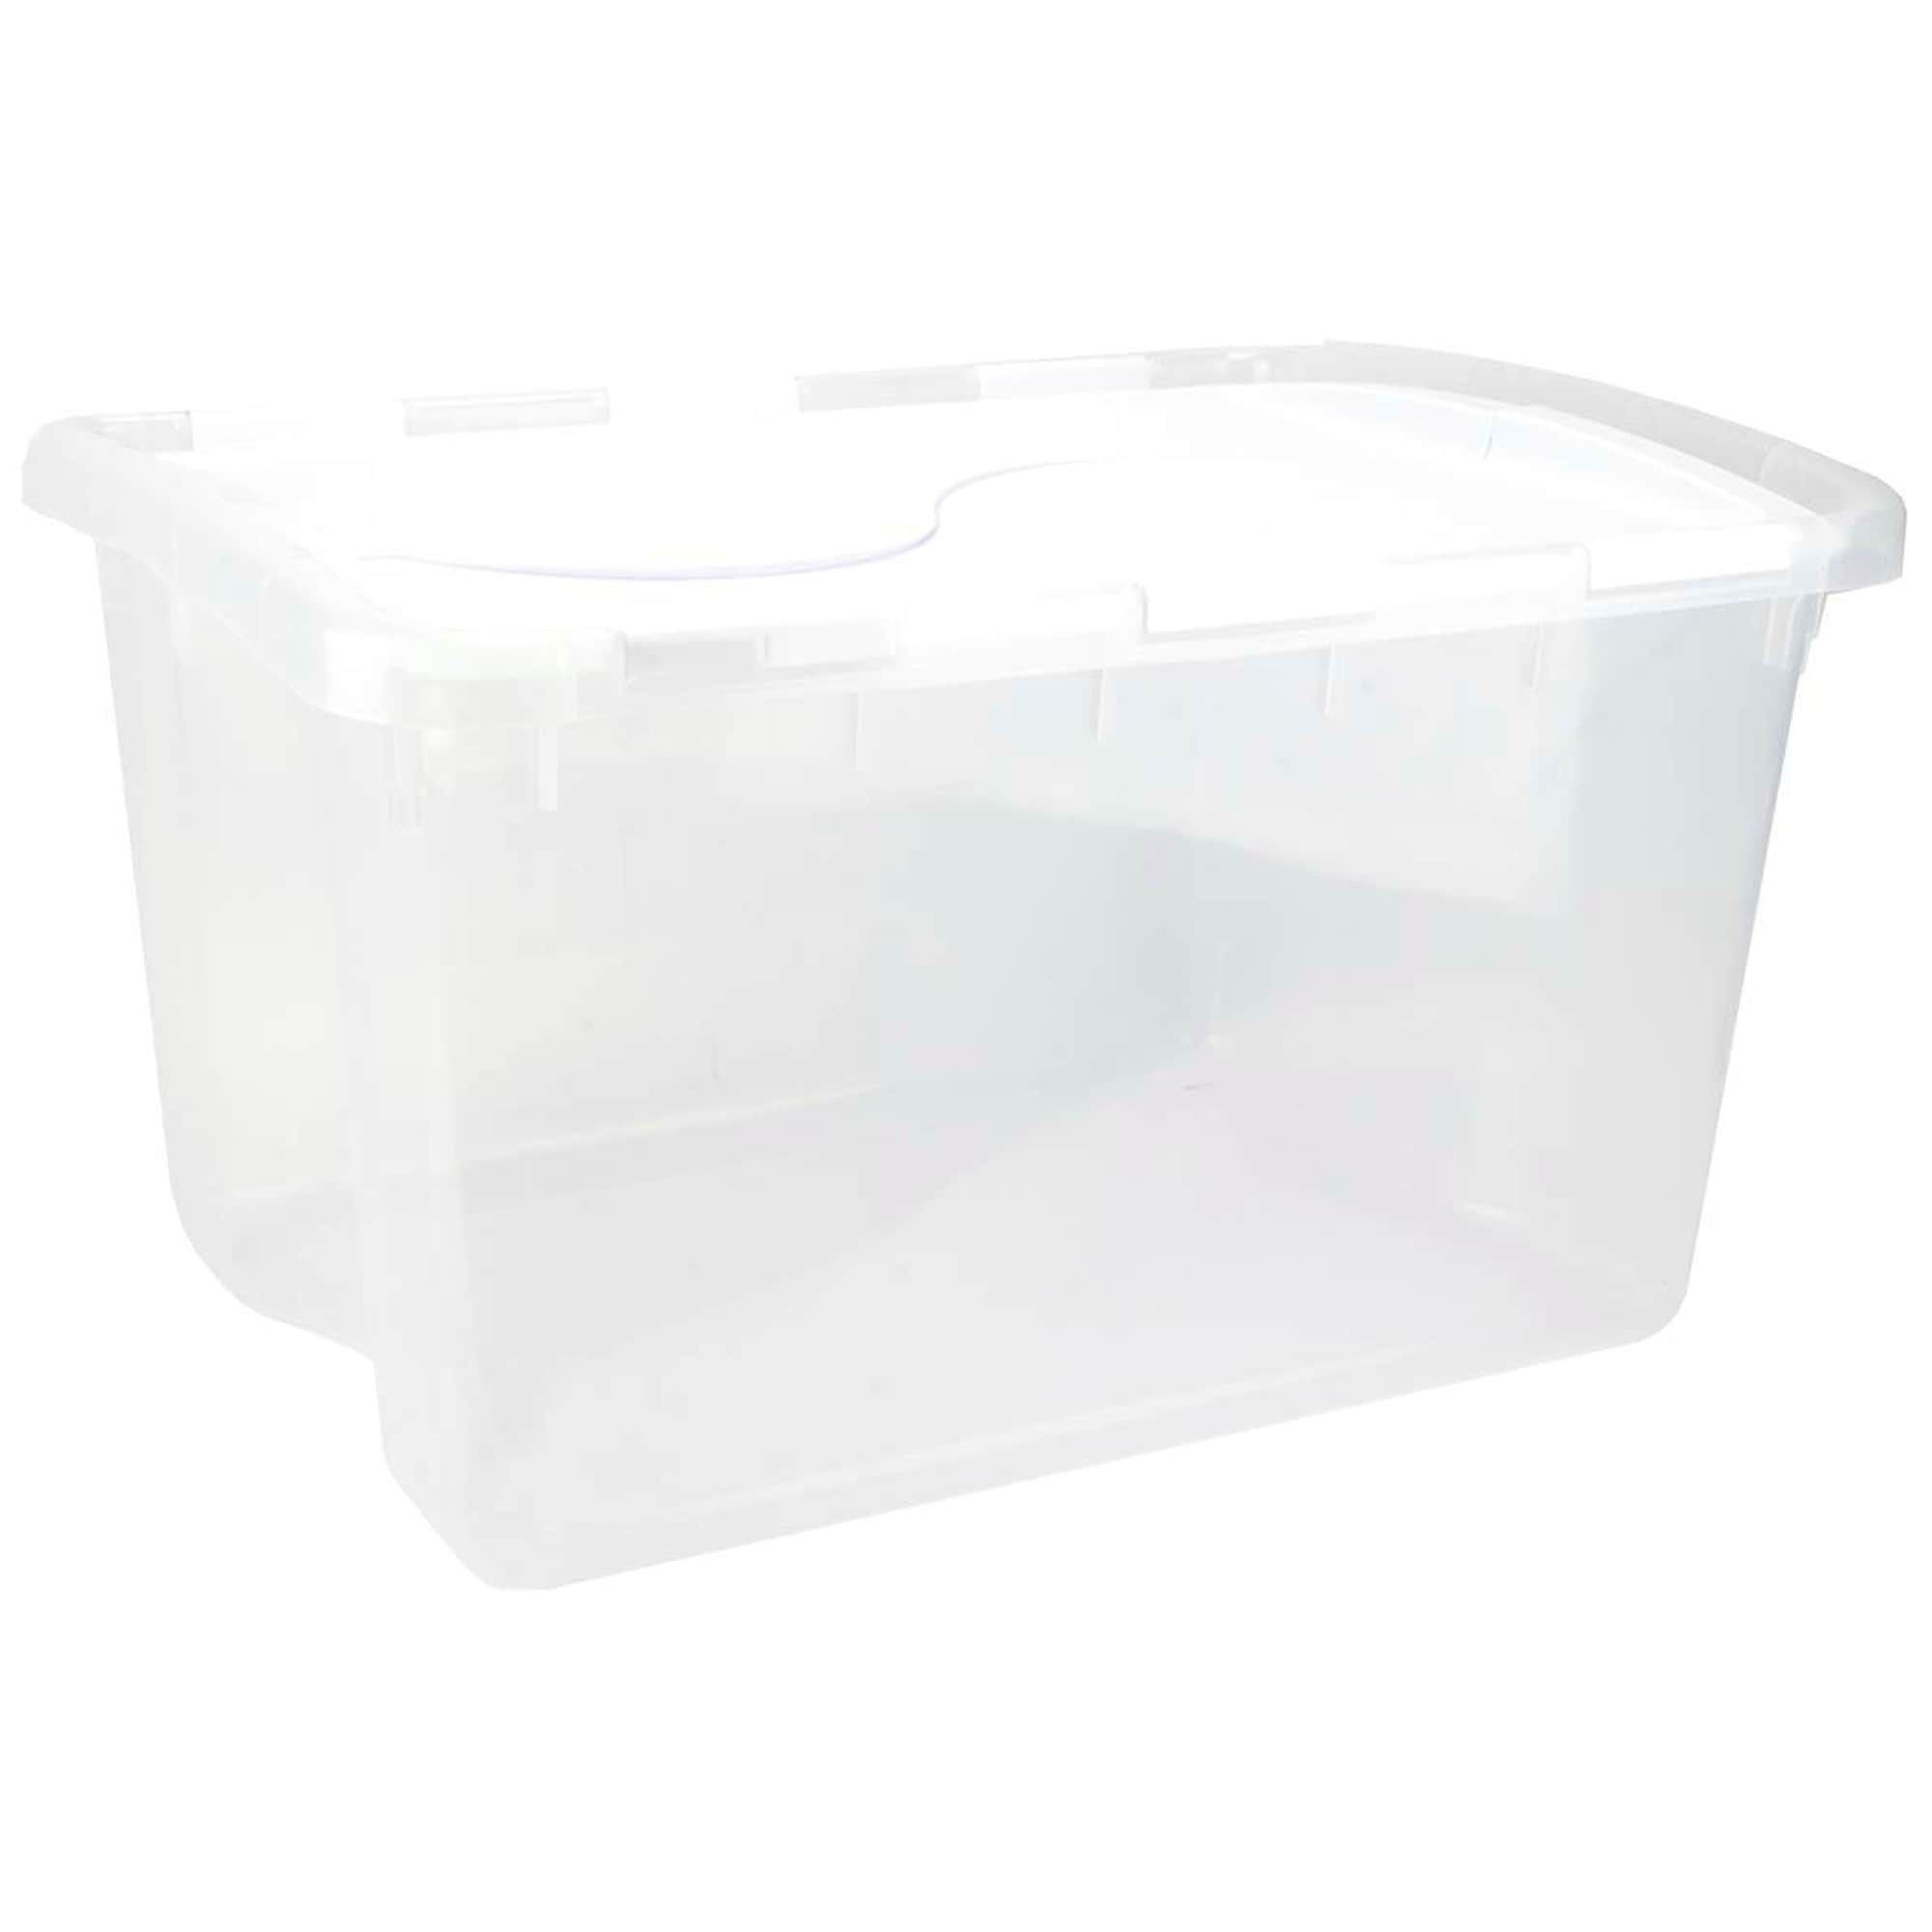 Sterilite 60 qt. HingeLID Storage Box Plastic, Flat Gray, Set of 6